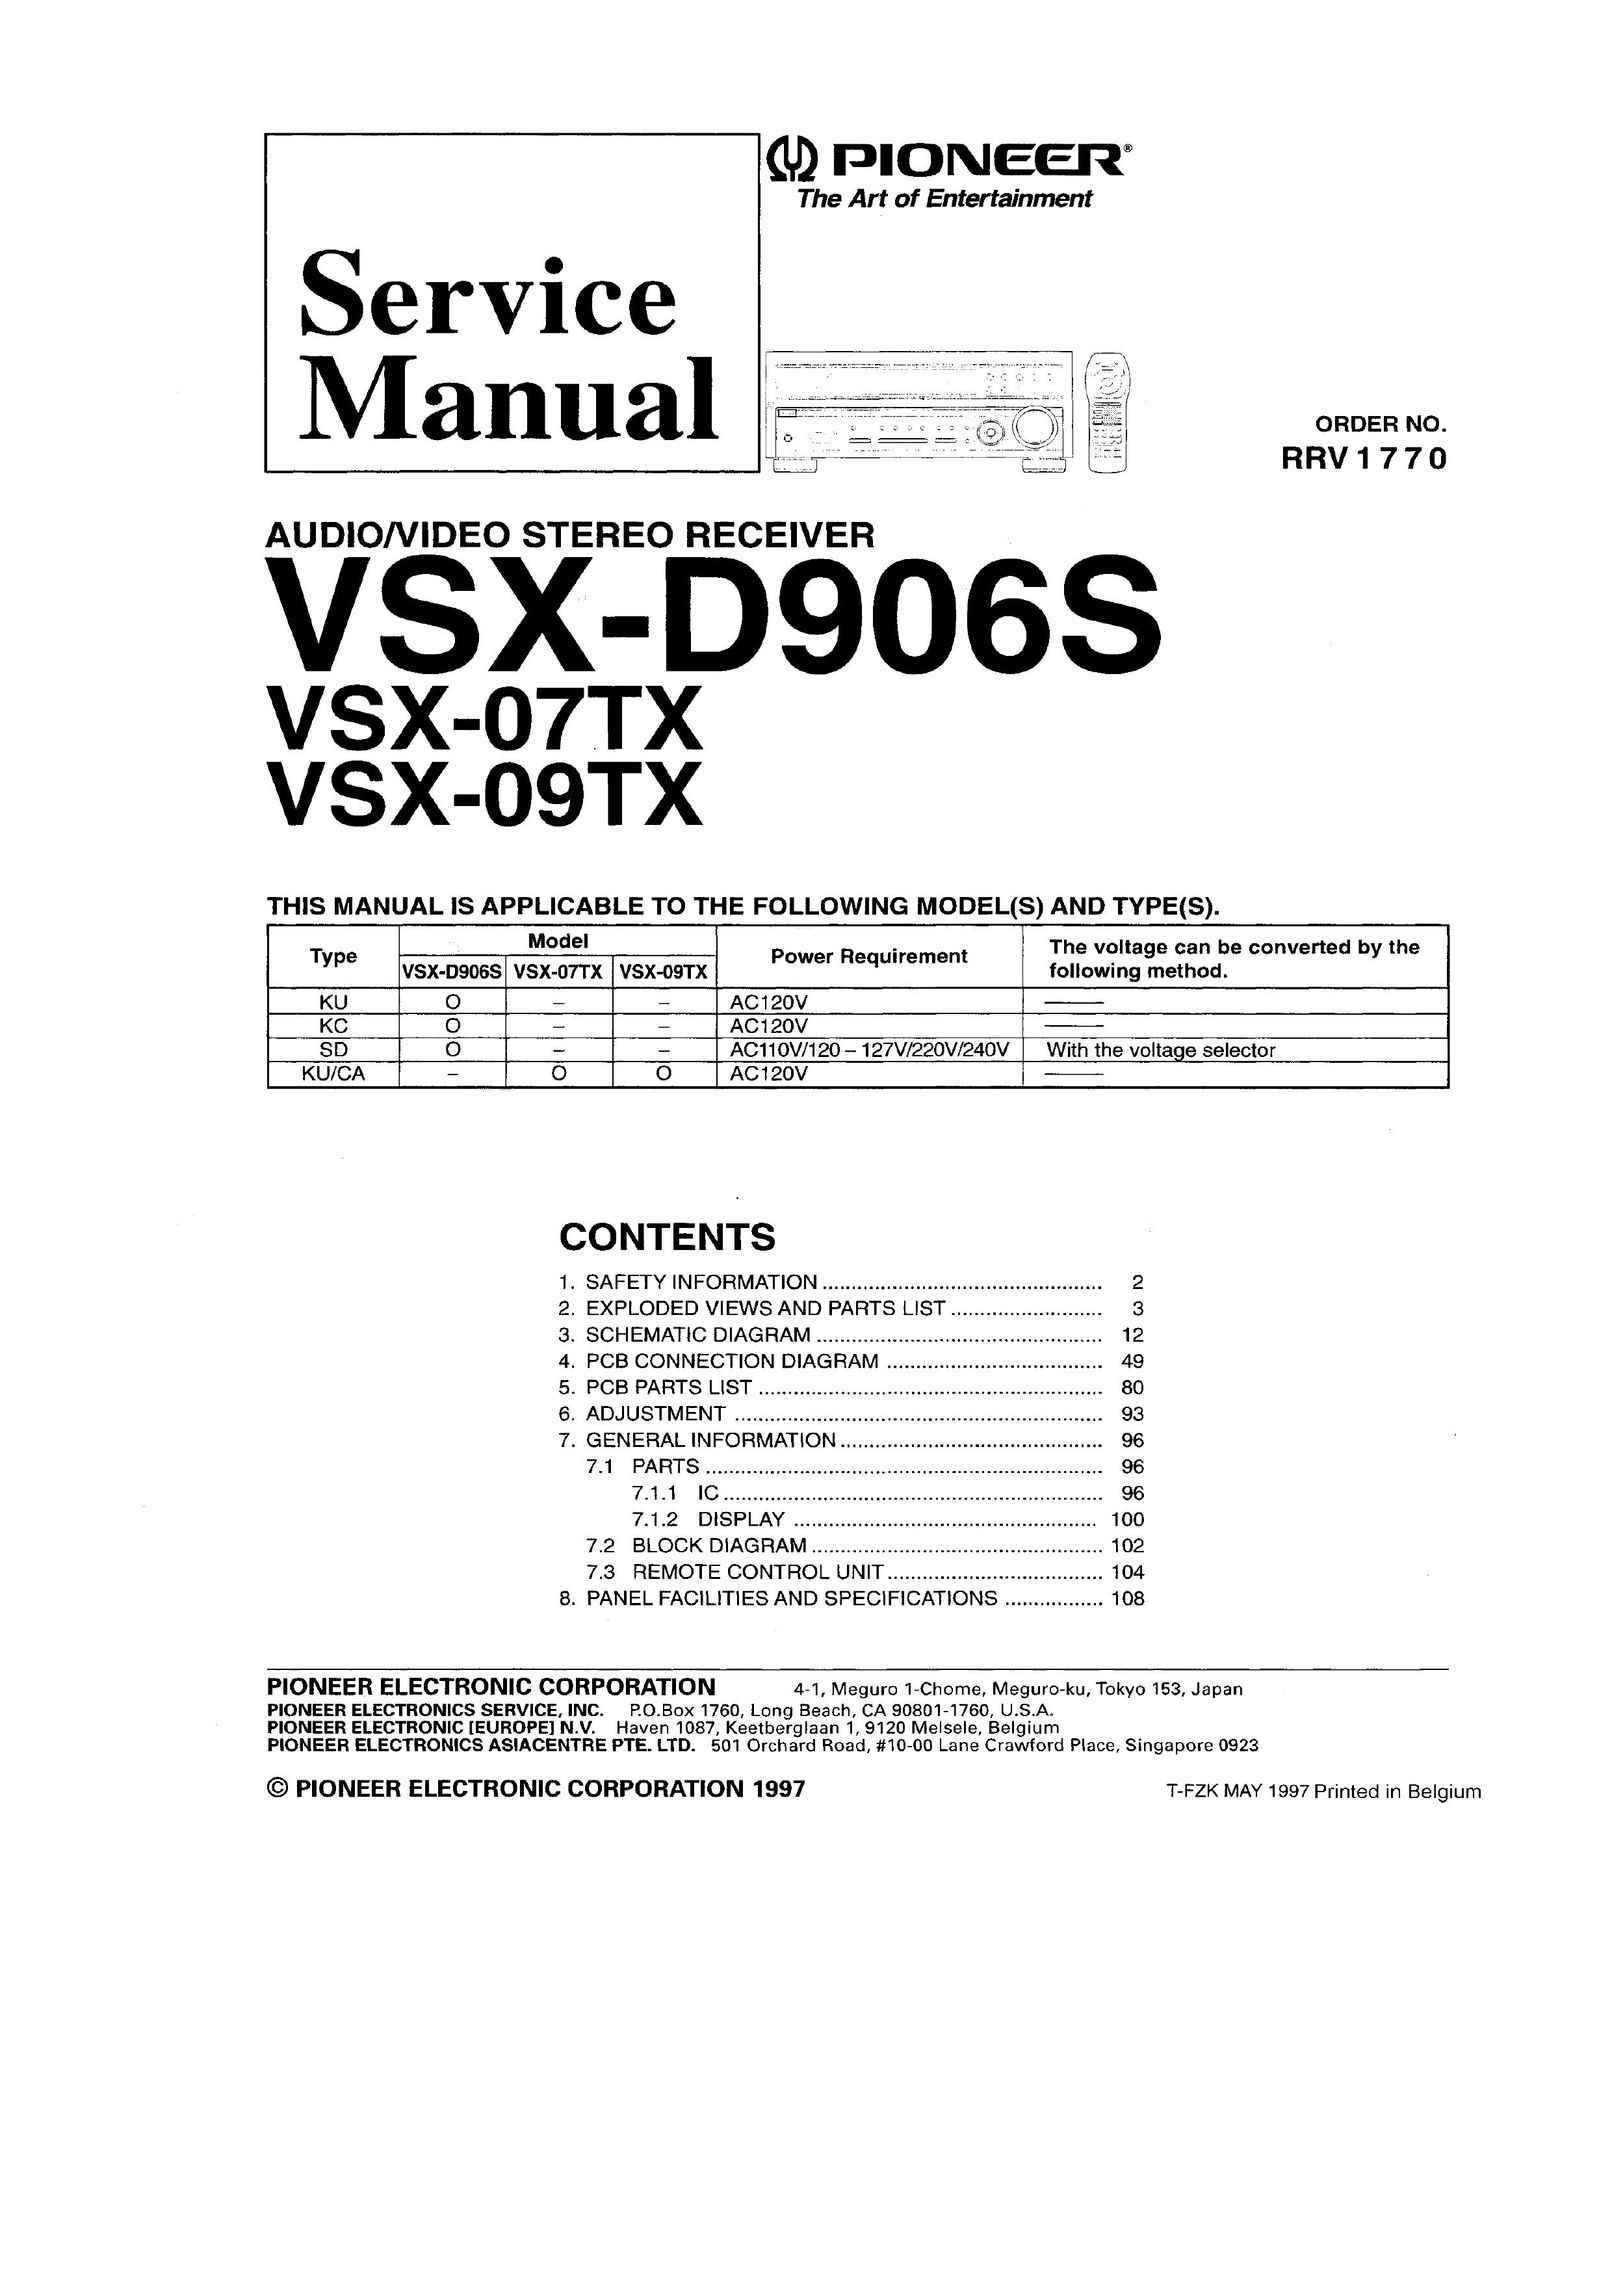 Pioneer VSX-09TX TV Receiver User Manual